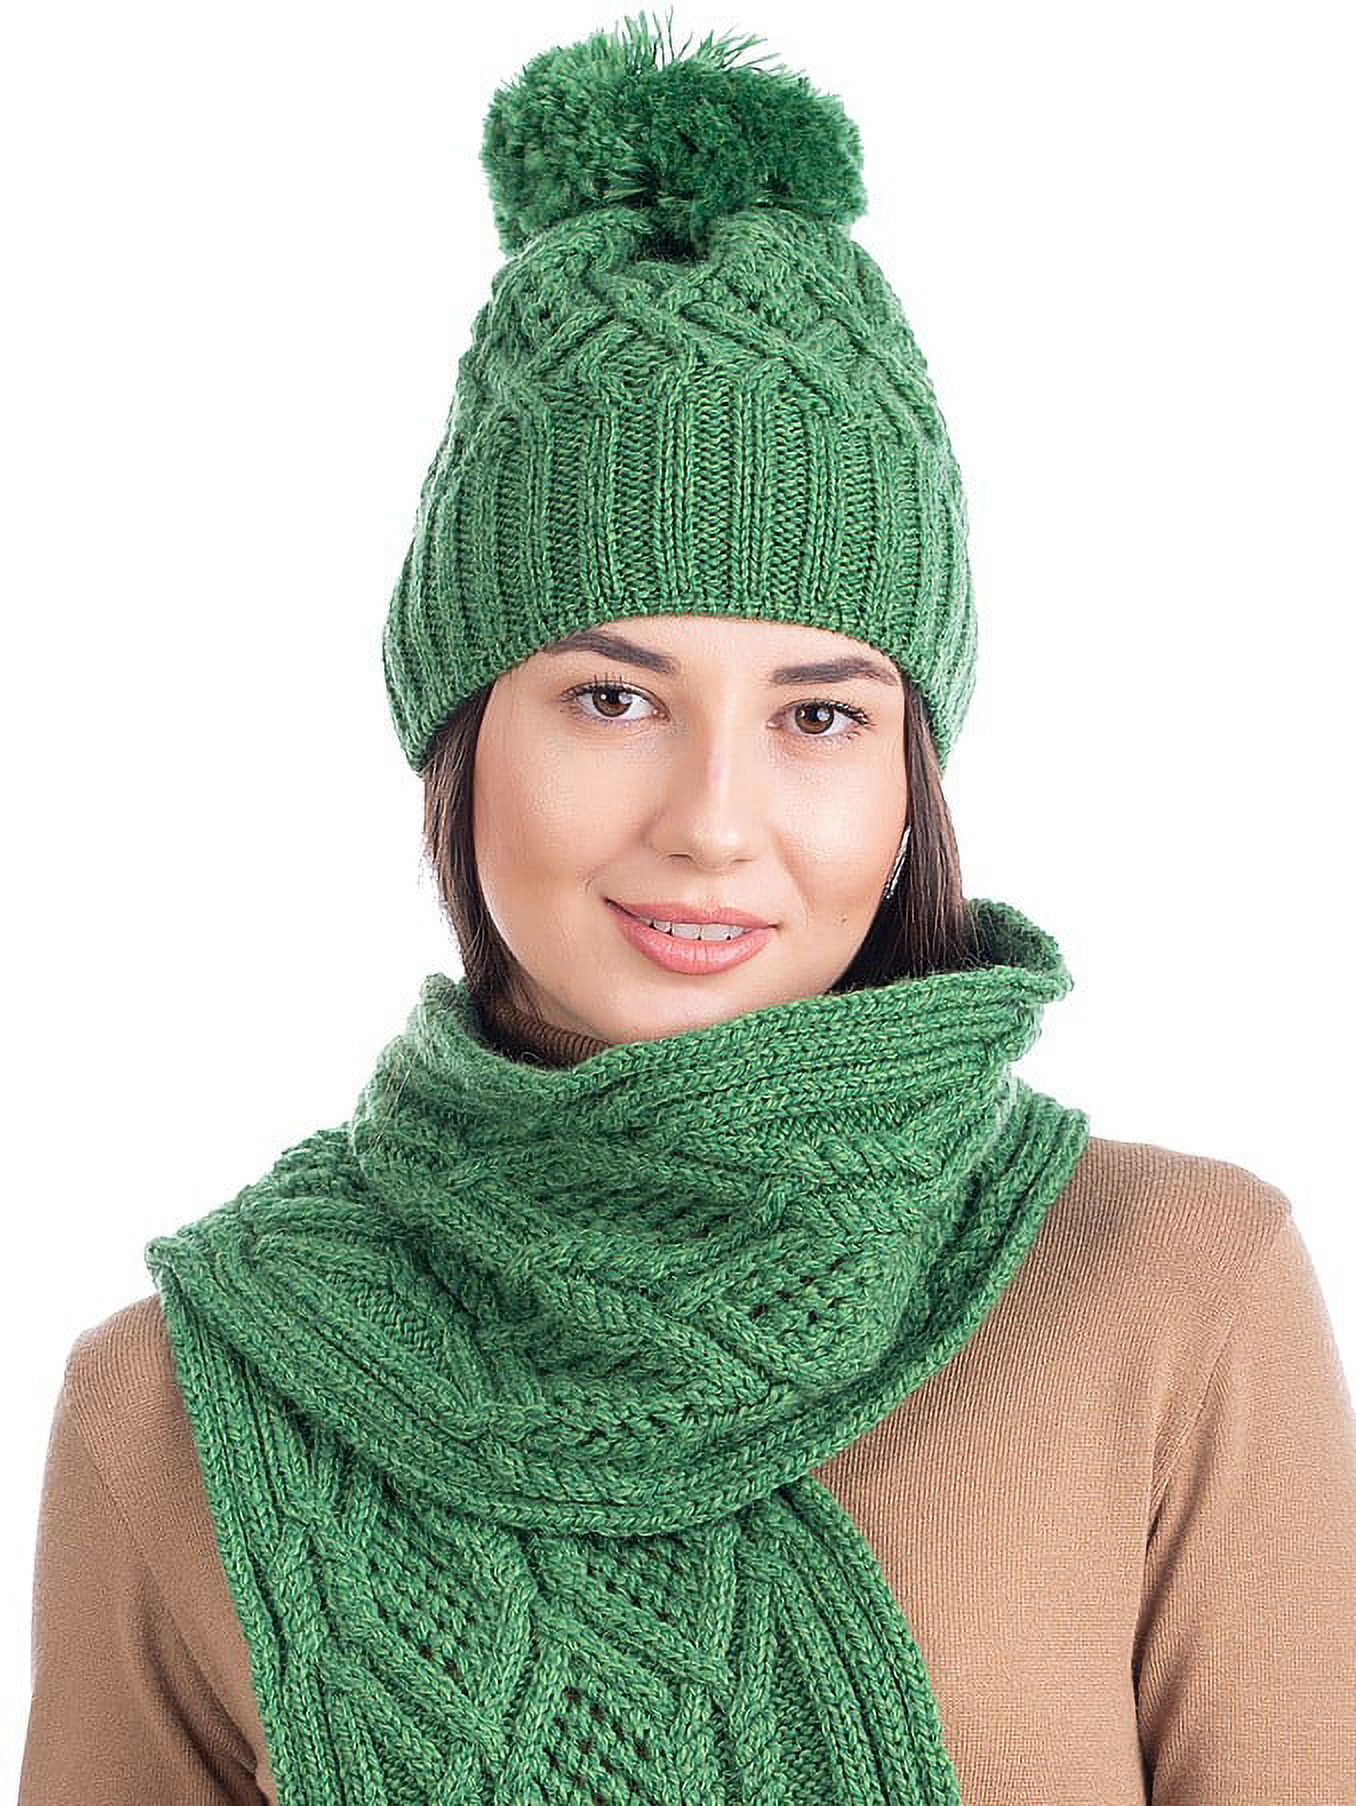 Aran Cable Knit Hat Pom Pom Green